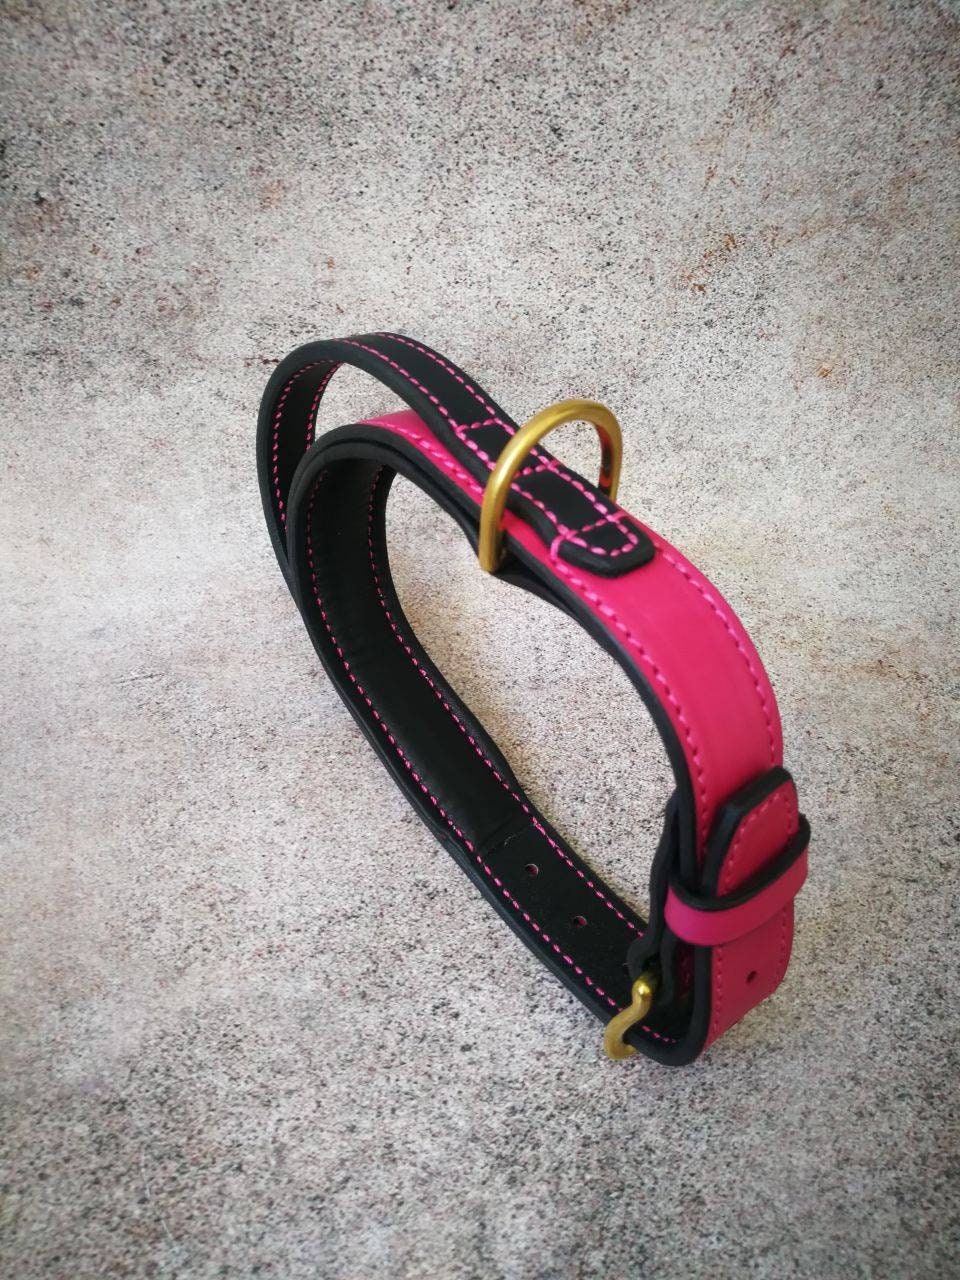 Leather Dog Collar with Handle, Pink Dog Collar, Pink Leather Dog Collar, Handle Dog Collar, Stylish Dog Collar, Tracking Walking Dog Collar